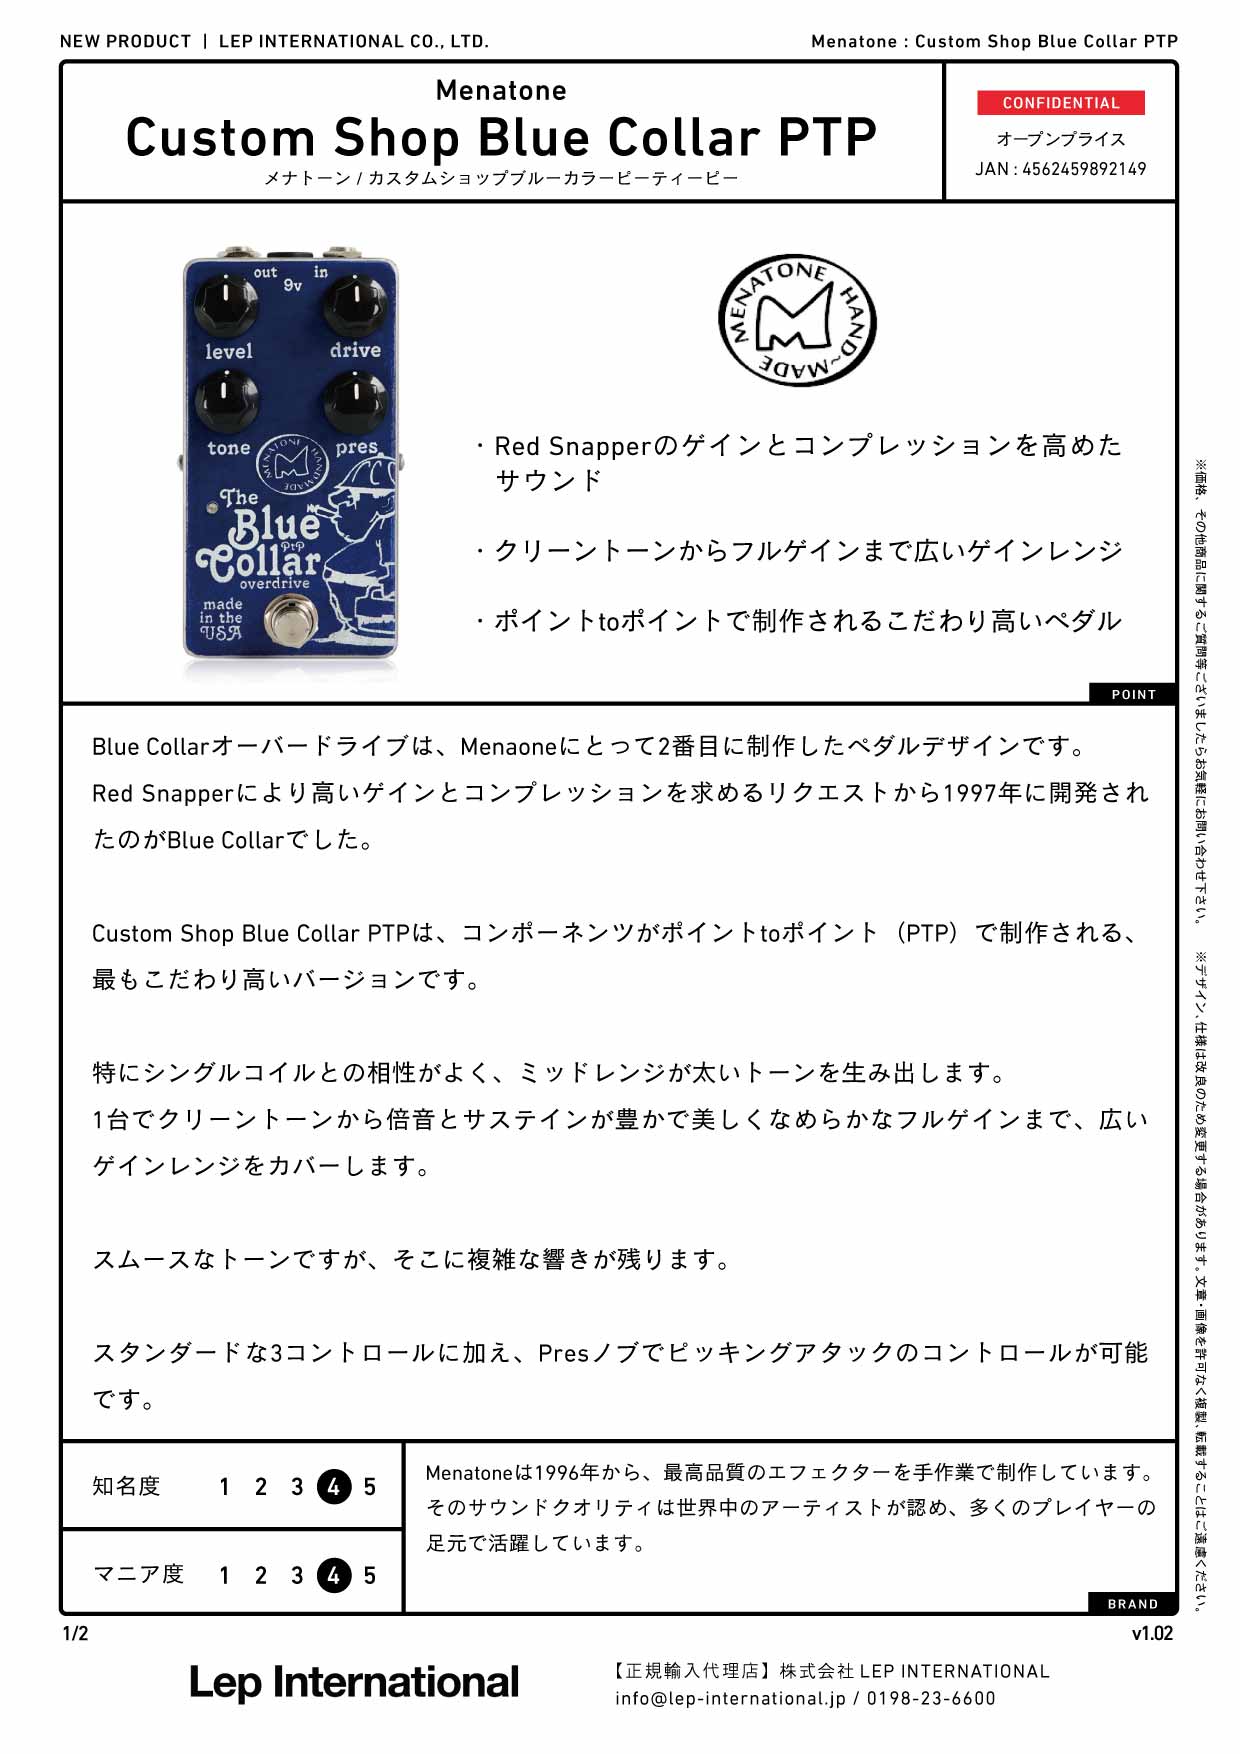 Menatone/Custom Shop Blue Collar PTP